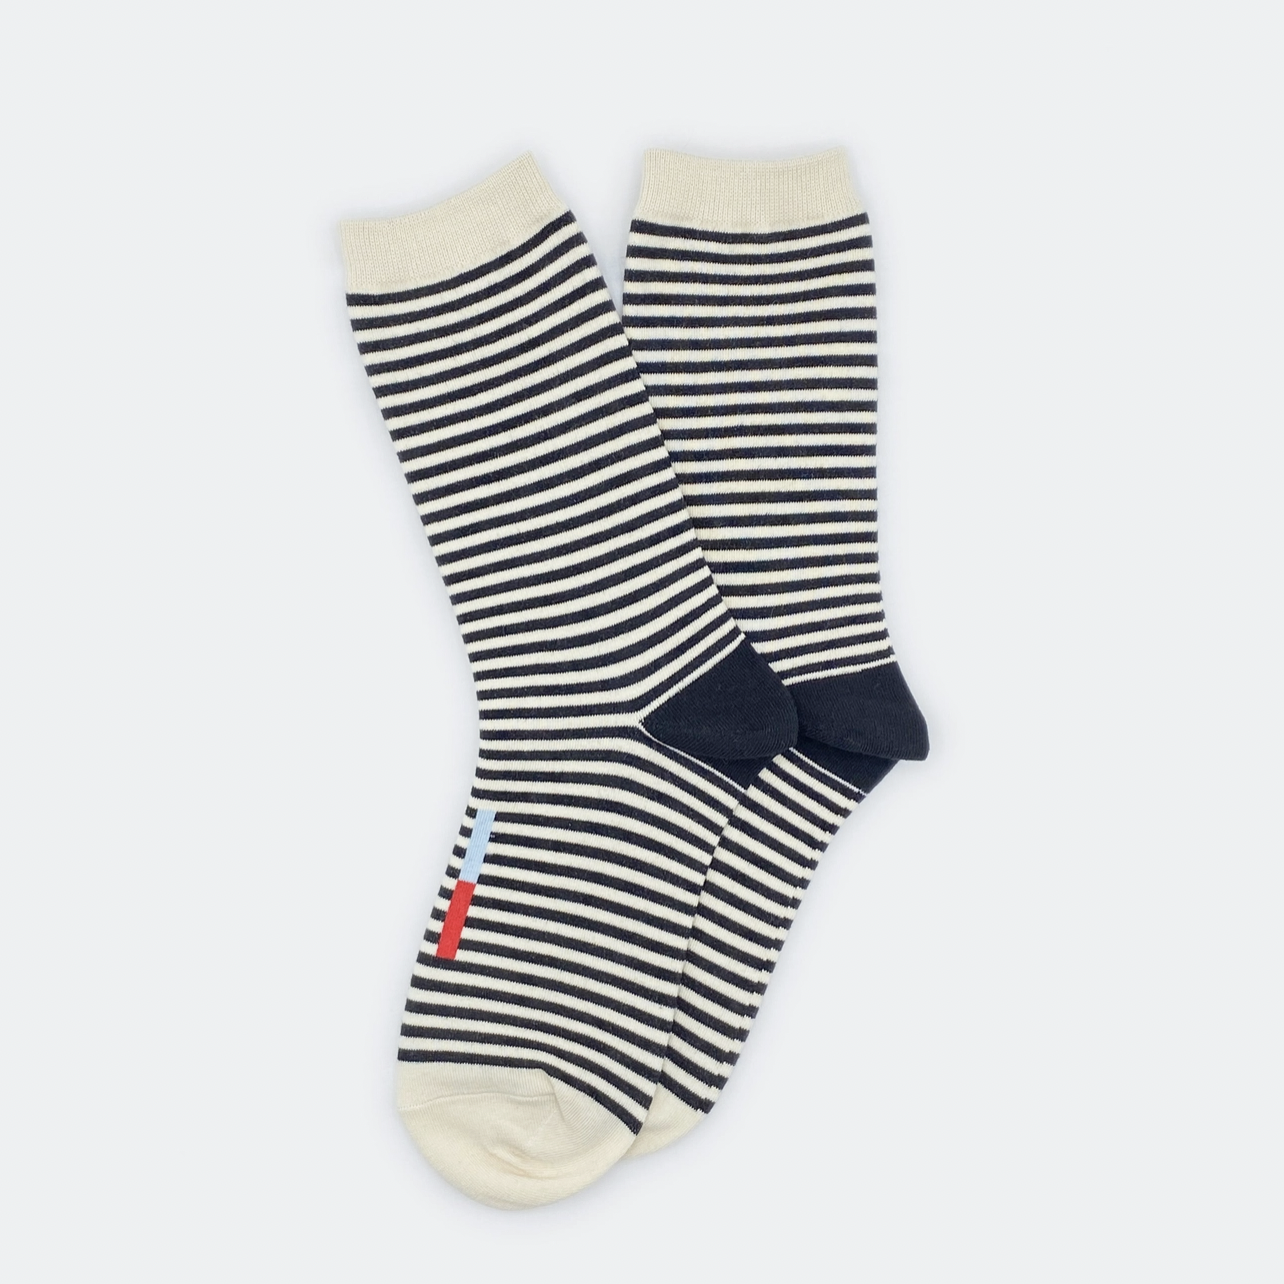 Hooray Sock Co. - Cole Socks | Prelude & Dawn | Los Angeles